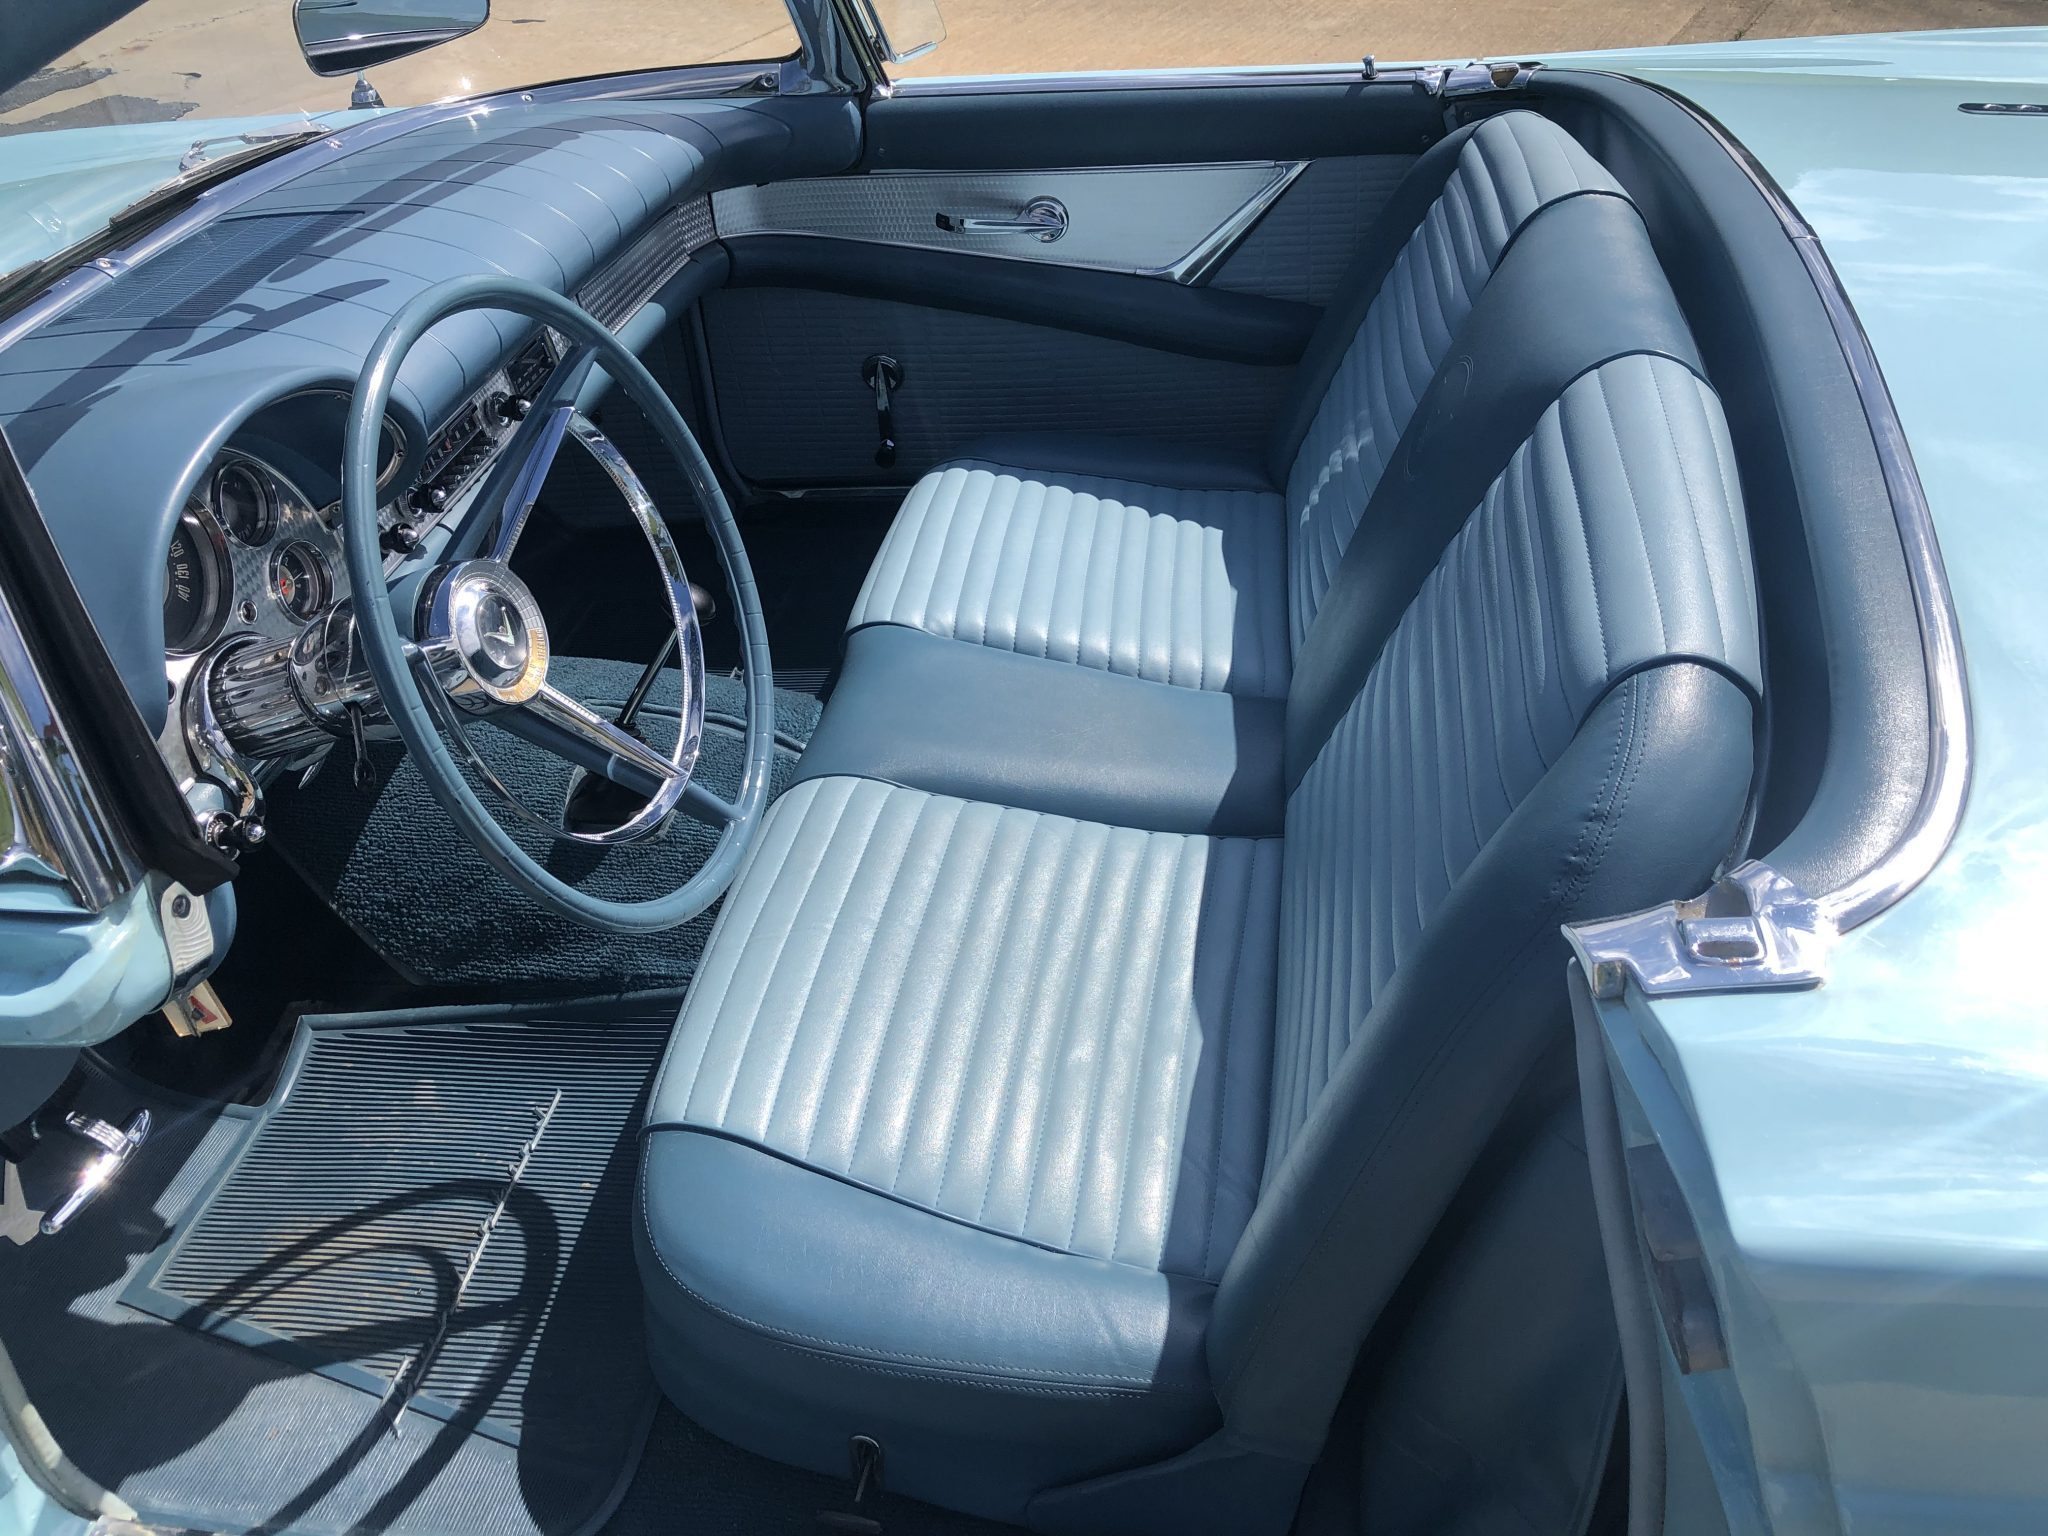 1957 E-Code Ford Thunderbird Two Tone Interior